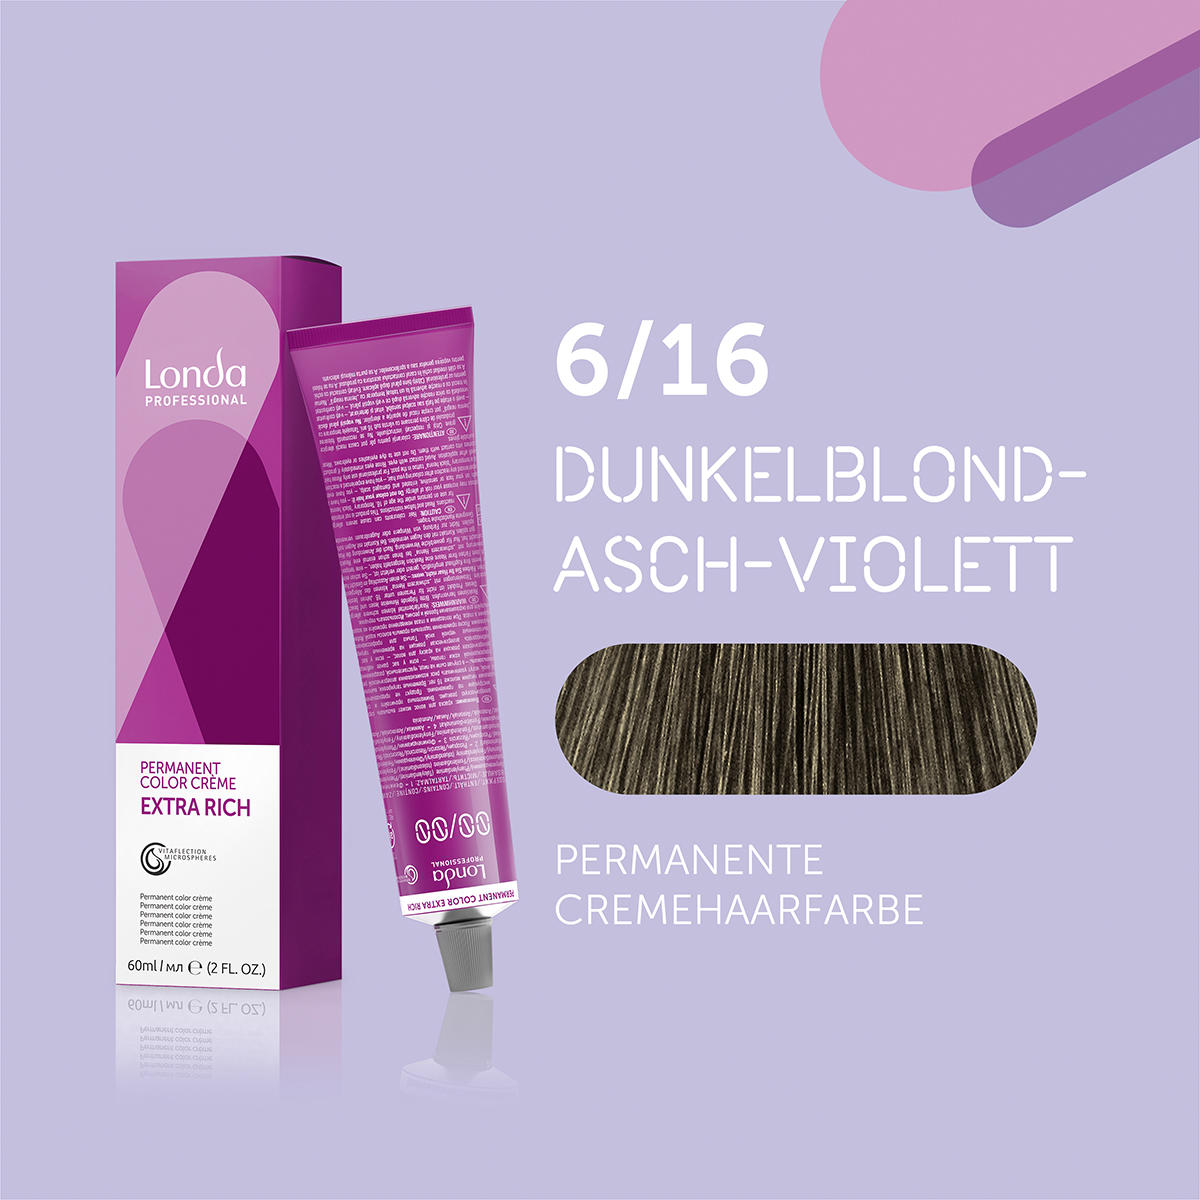 Londa Permanente Cremehaarfarbe Extra Rich 6/16 Dunkelblond Asch Violett, Tube 60 ml